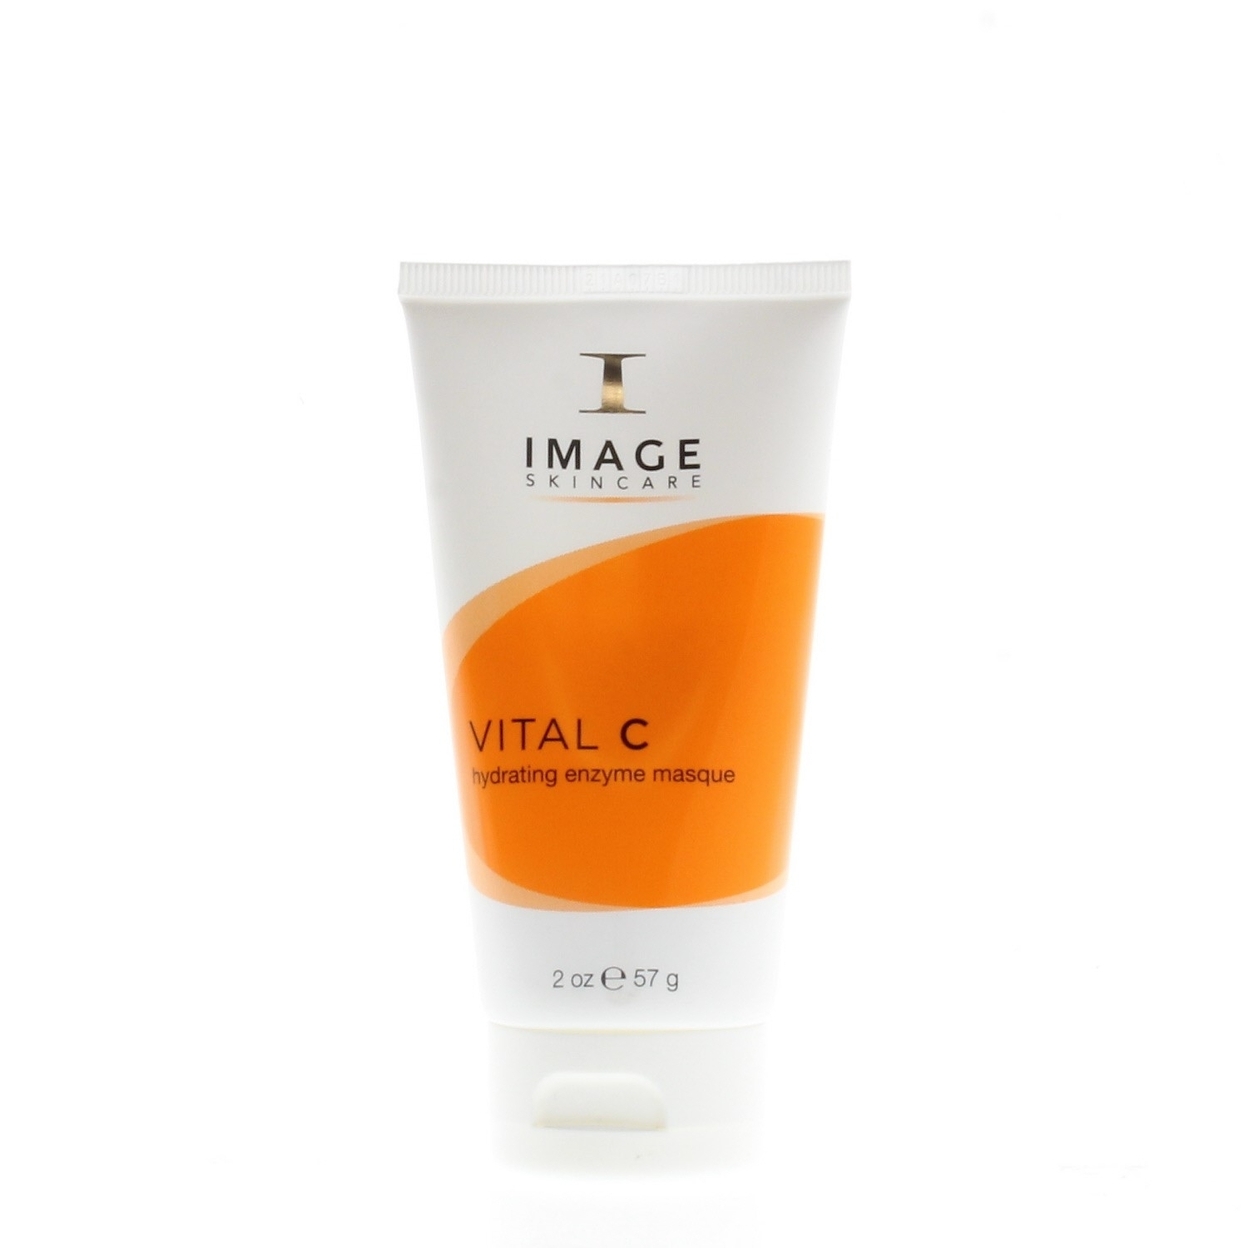 Image Skincare Vital C Hydrating Enzyme Masque 2oz